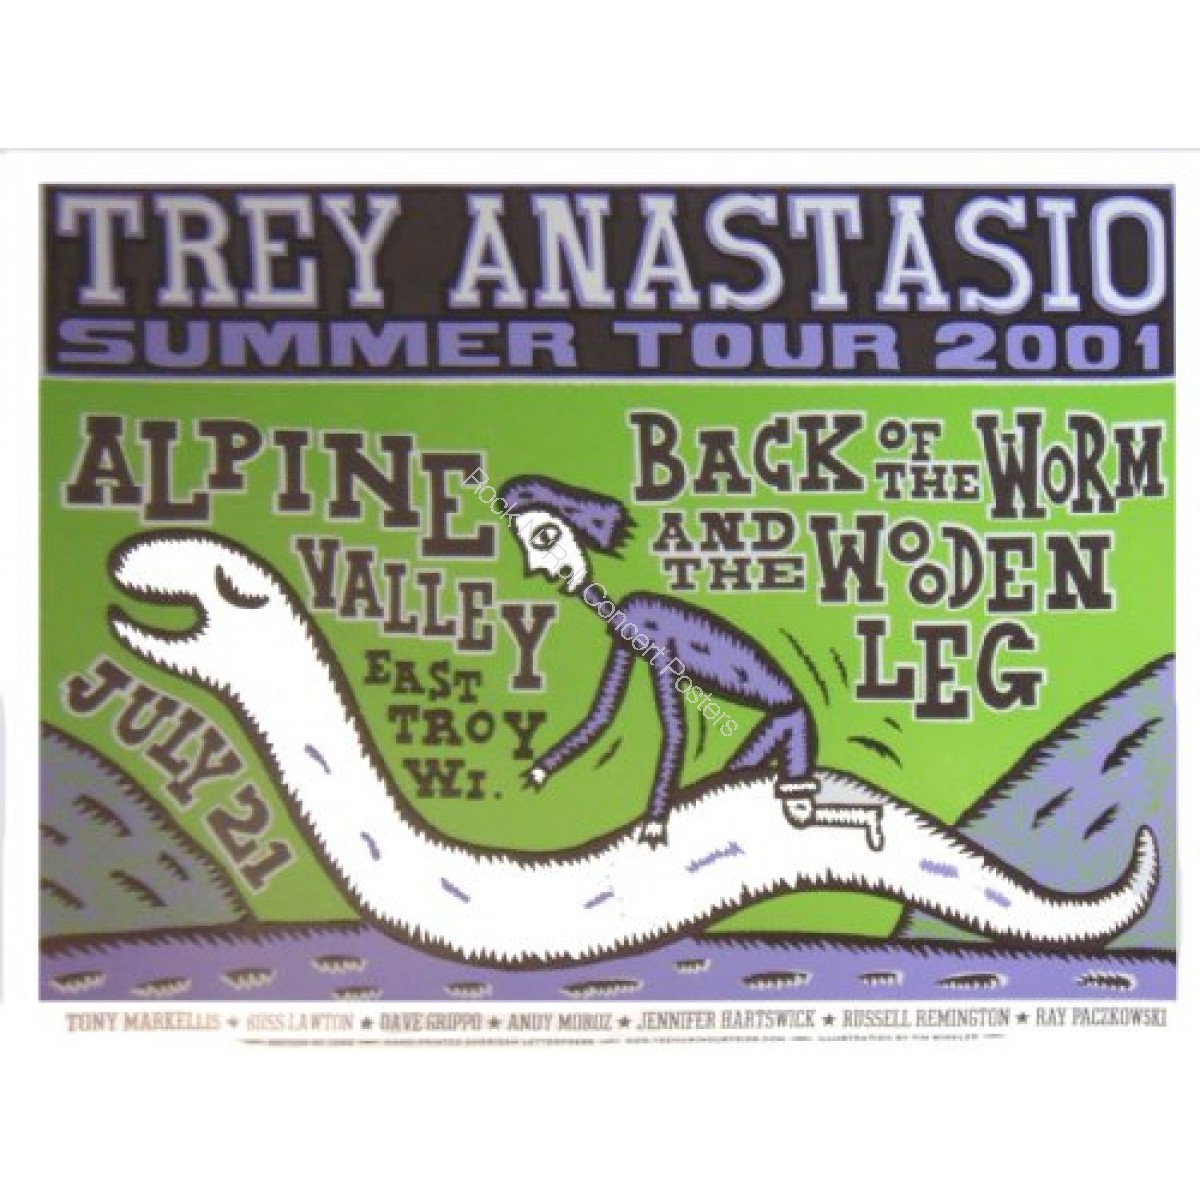 Trey Anastasio Alpine Valley 7/21/01 Official Screen Printed Poster L.E.